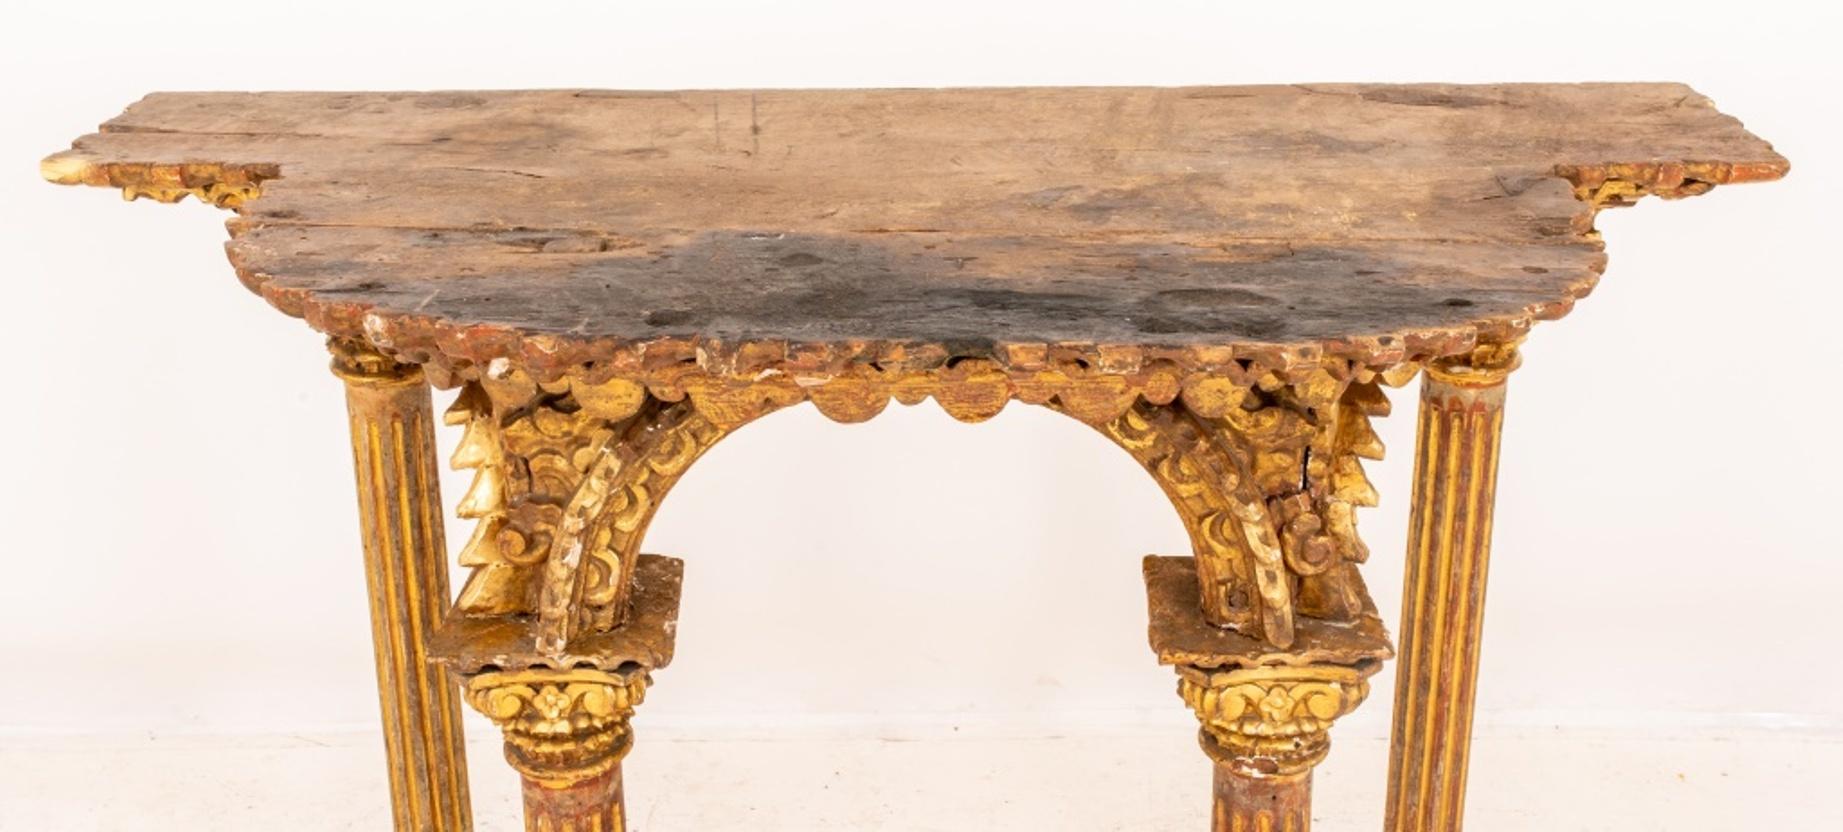 Baroque Fragment de retable en bois doré du baroque tardif, fin du XVIIe siècle. en vente